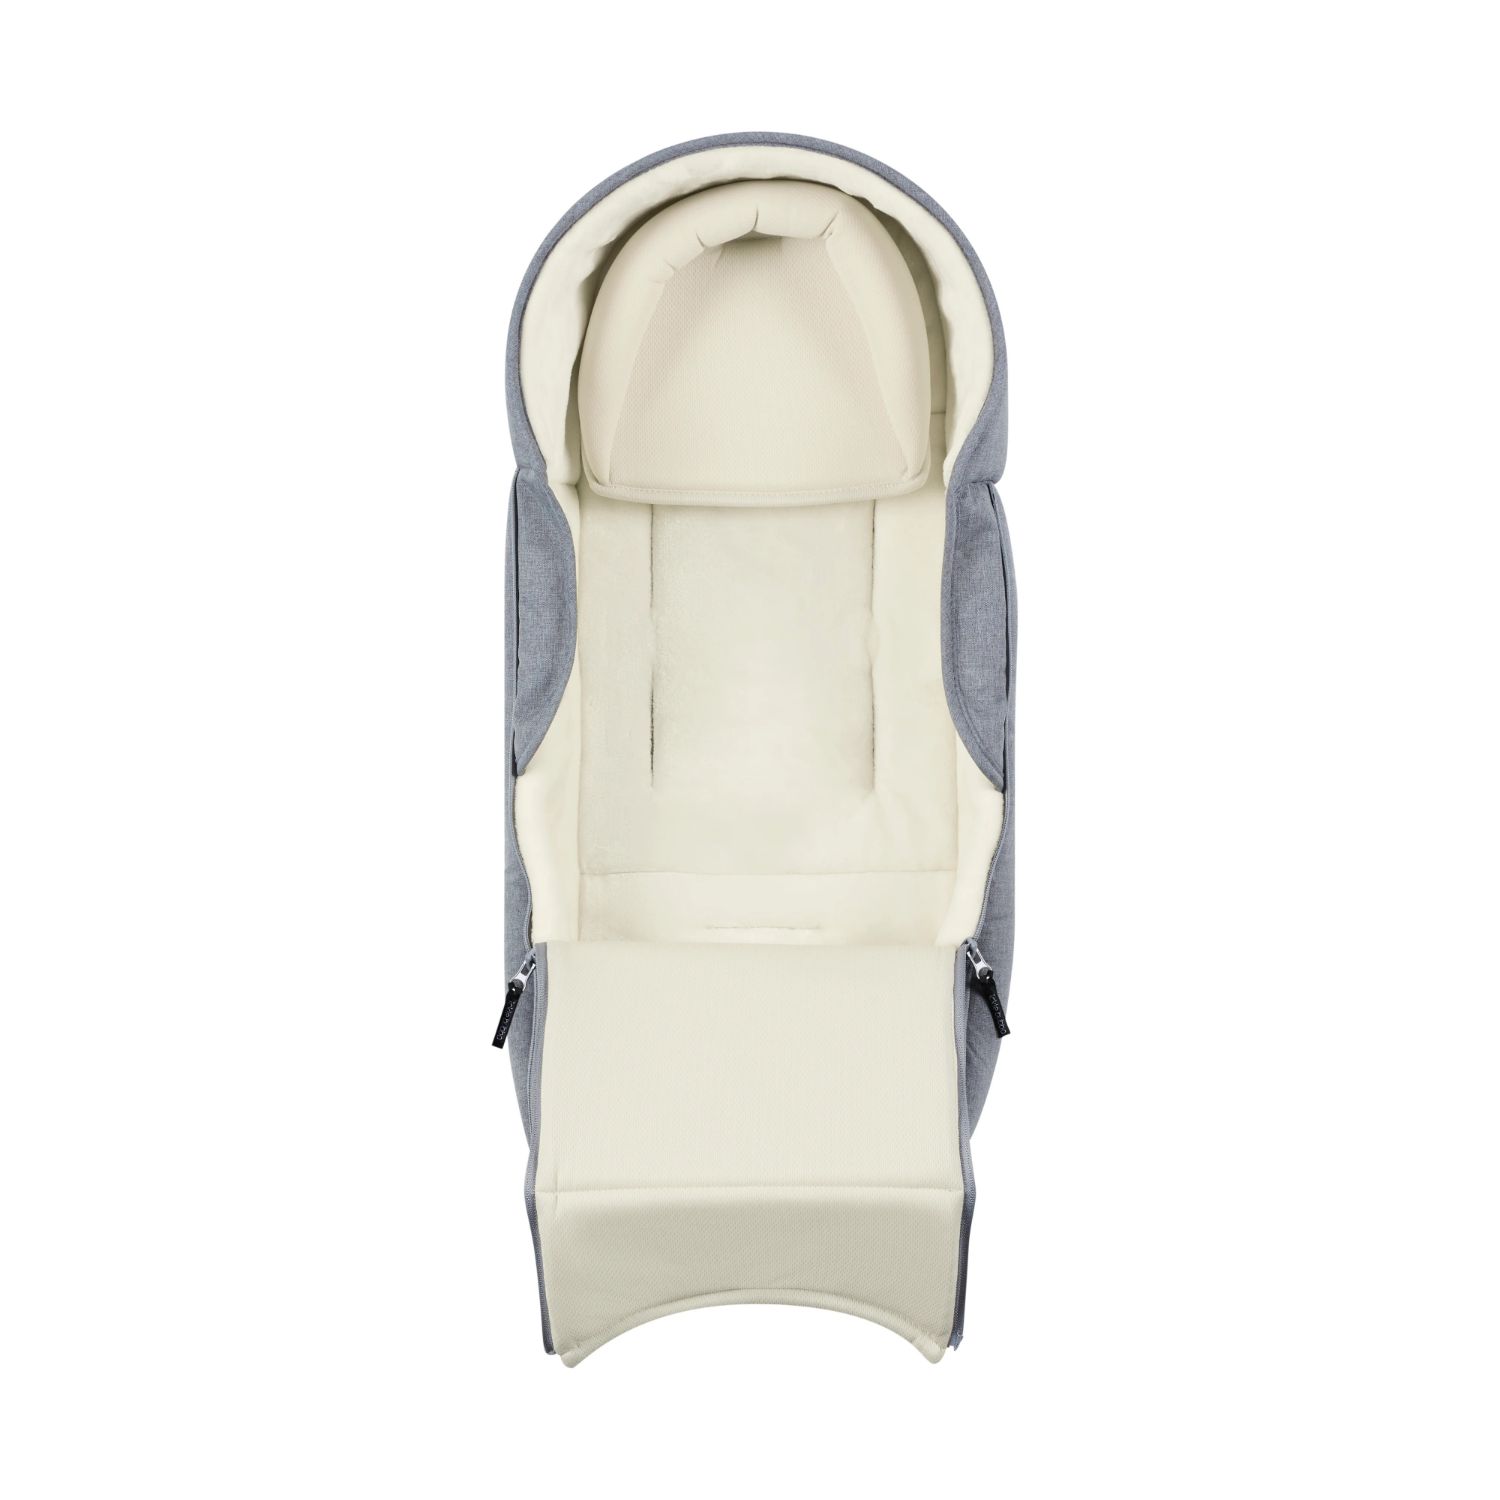 Interior of Ickle Bubba Newborn Cocoon Stroller Accessory in Grey colour